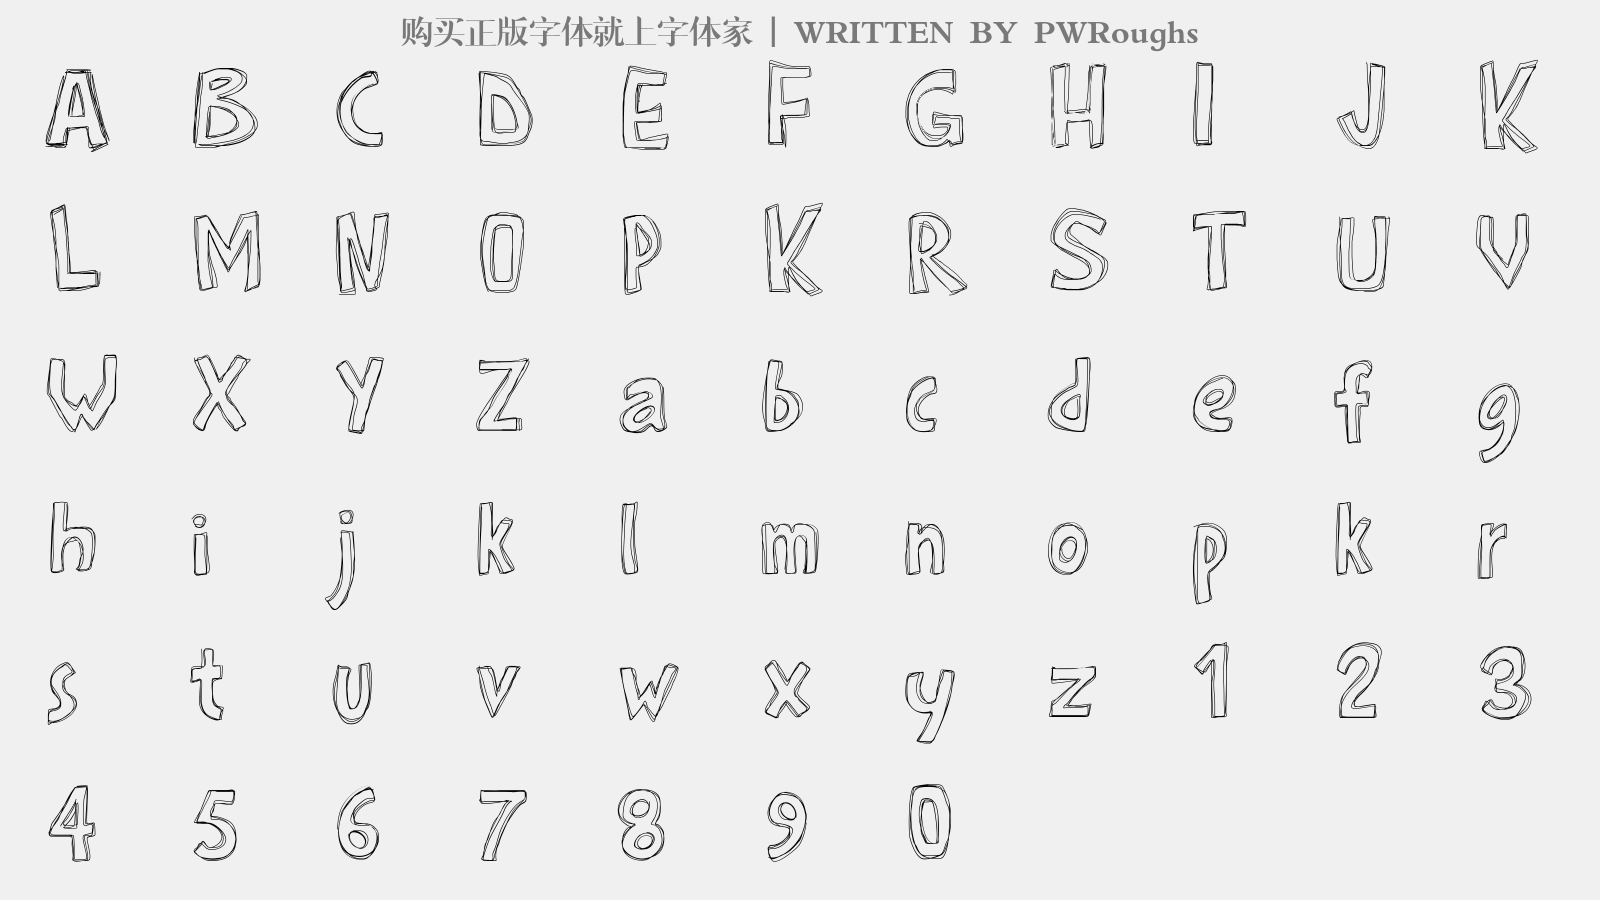 PWRoughs - 大写字母/小写字母/数字